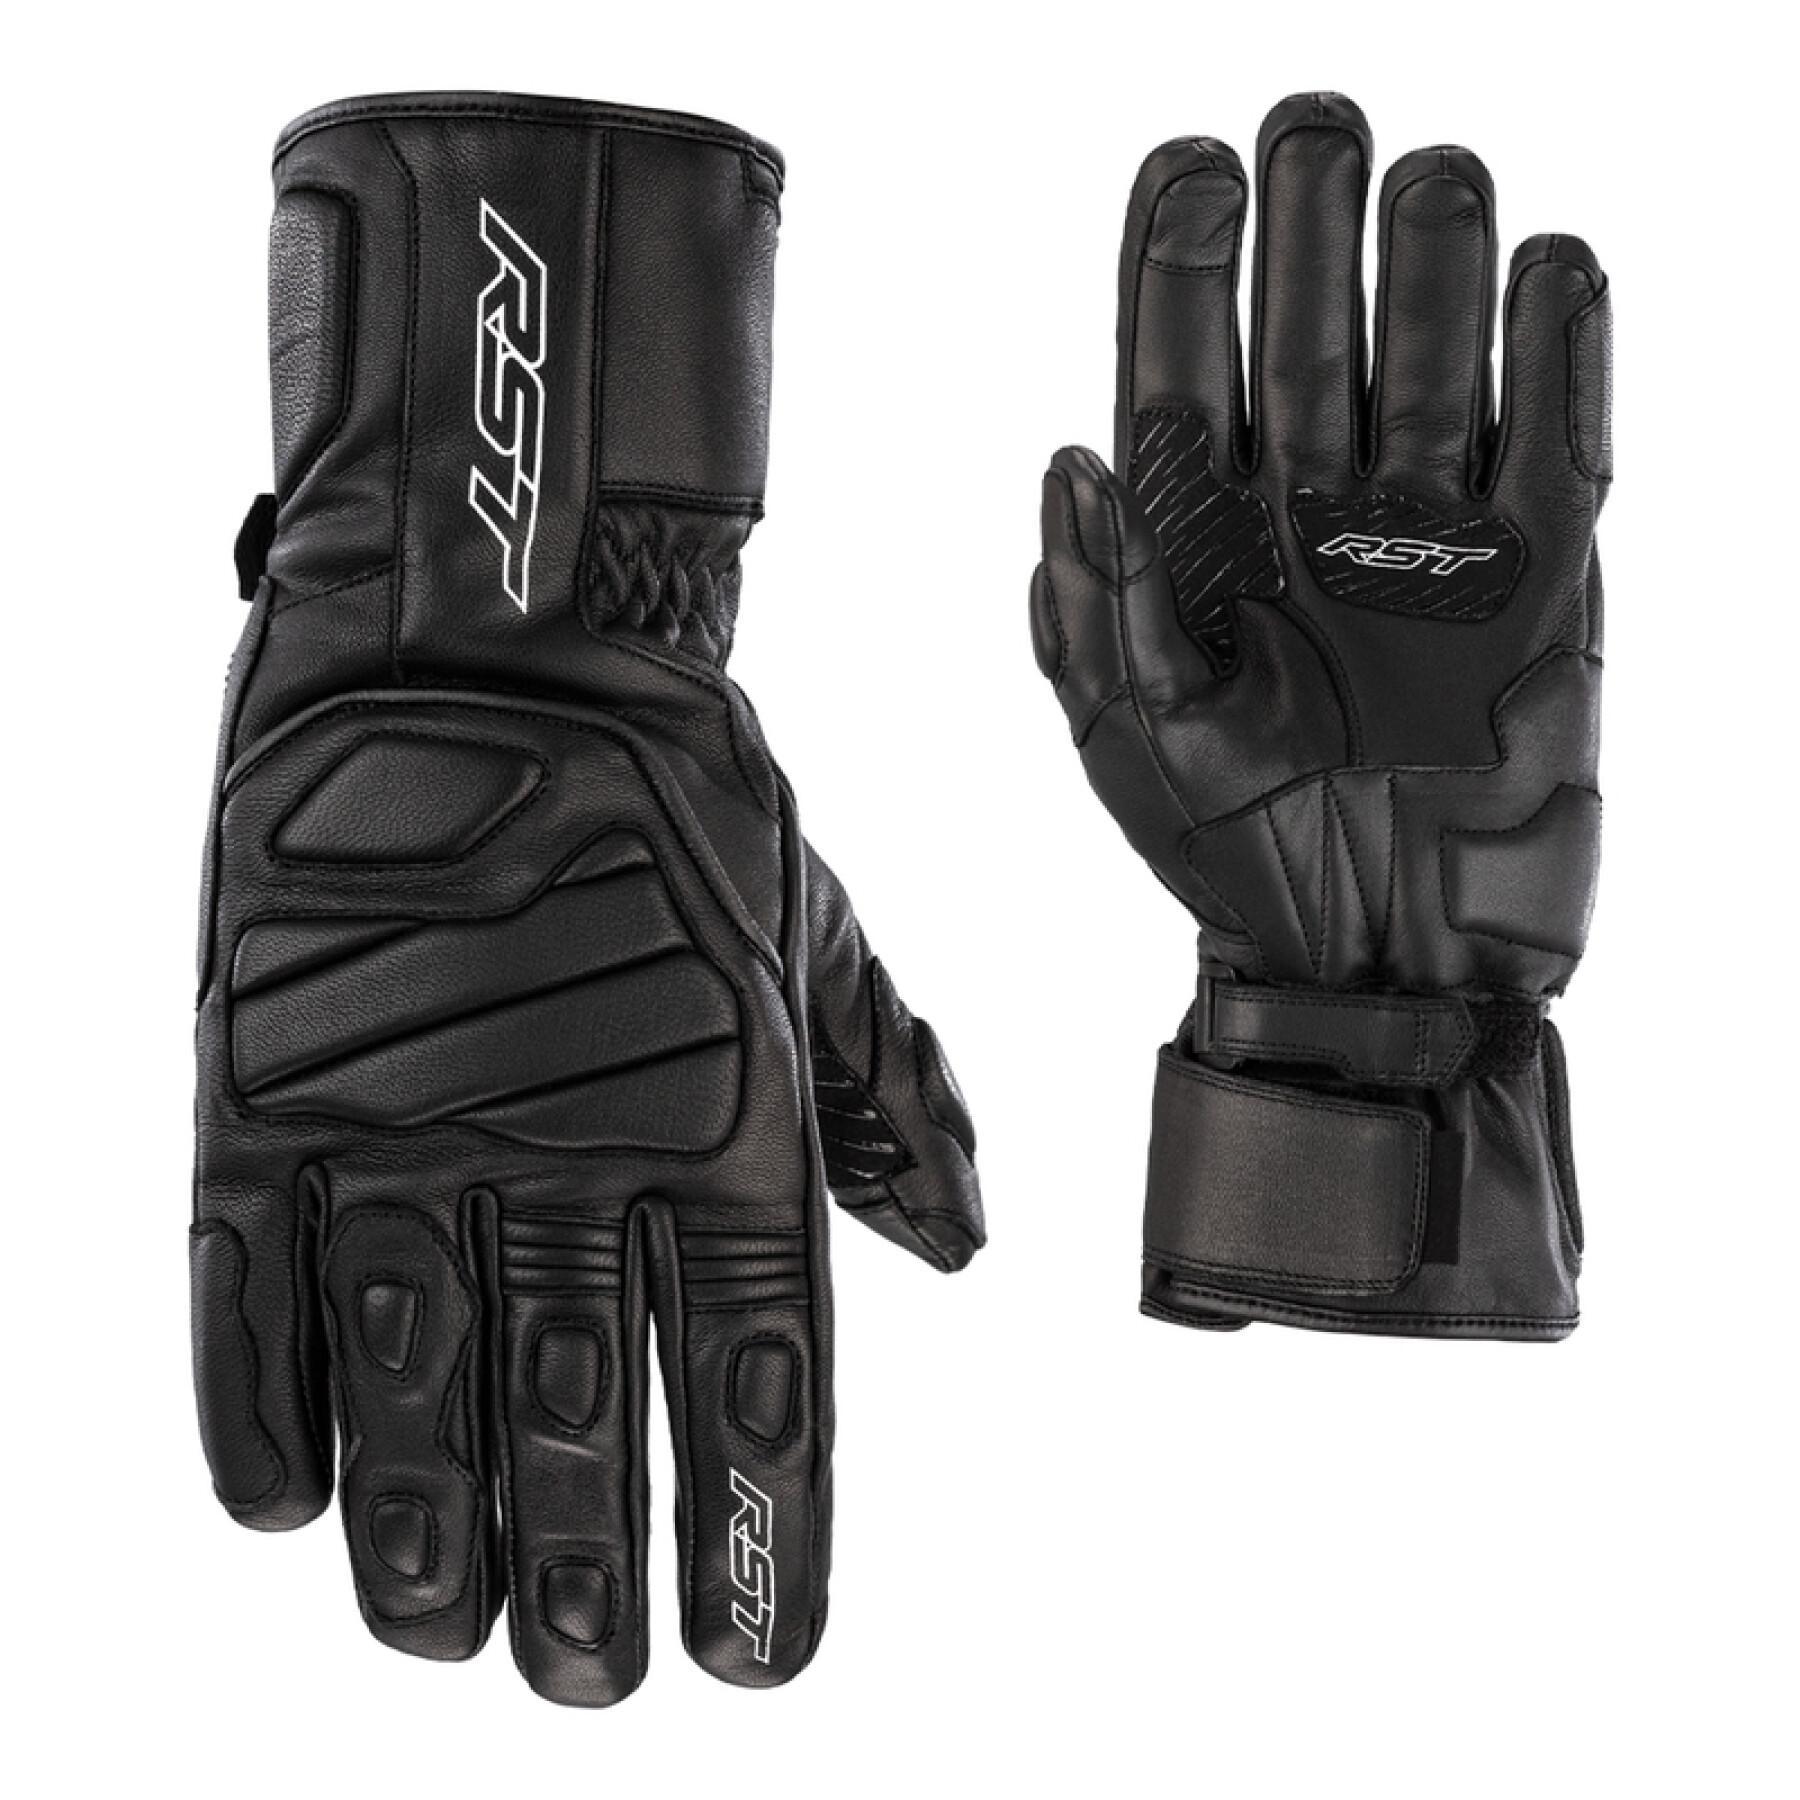 Waterproof leather all-season motorcycle gloves RST Turbine